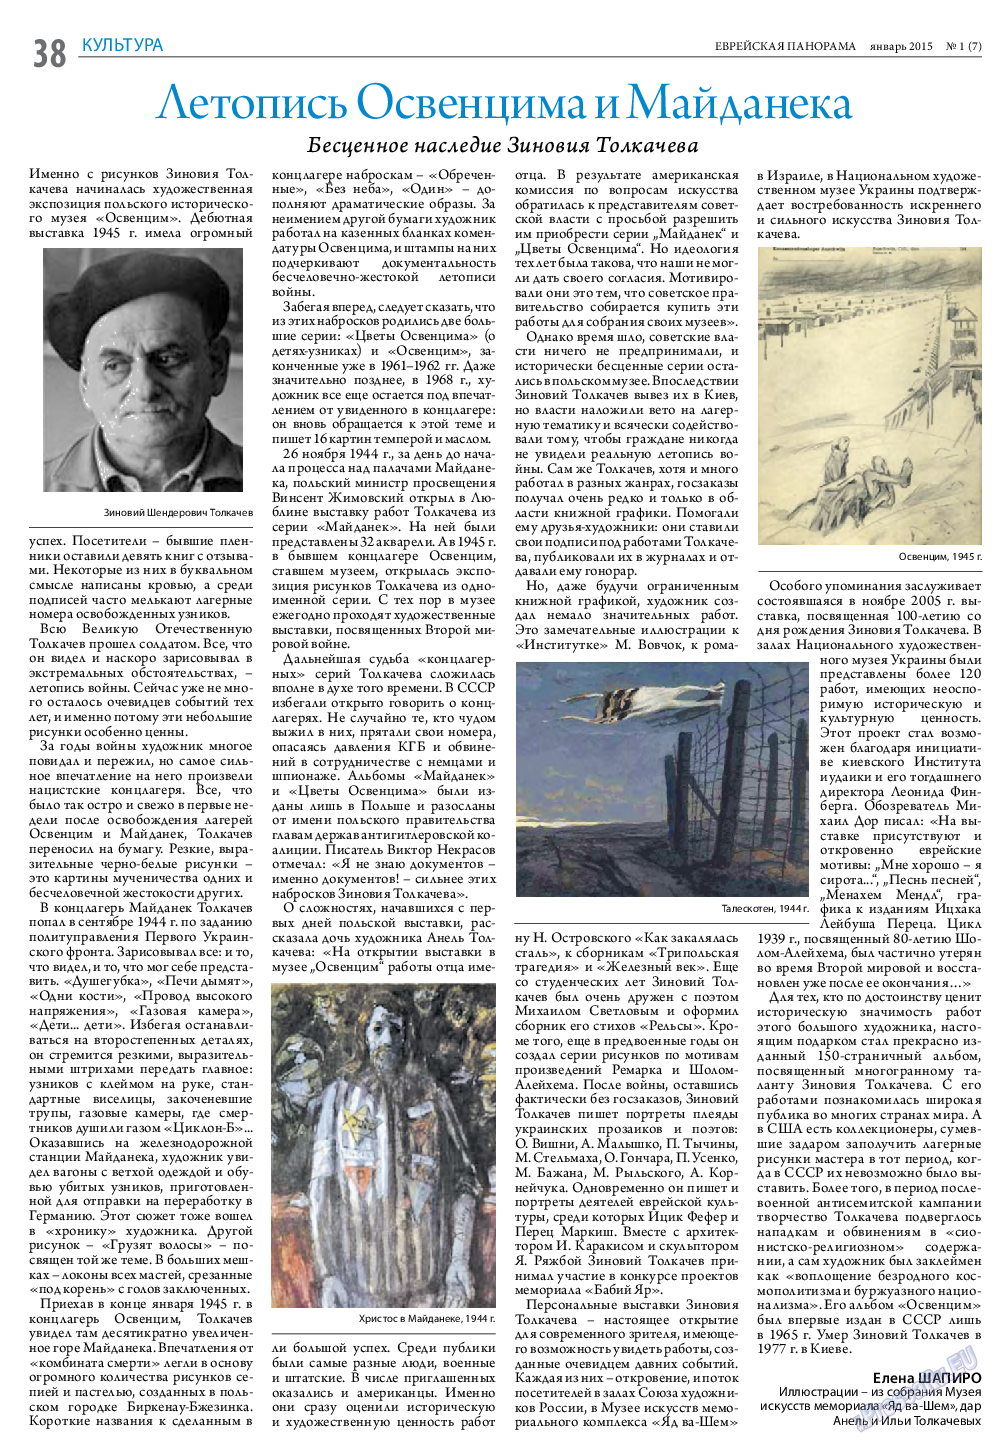 Еврейская панорама, газета. 2015 №1 стр.38